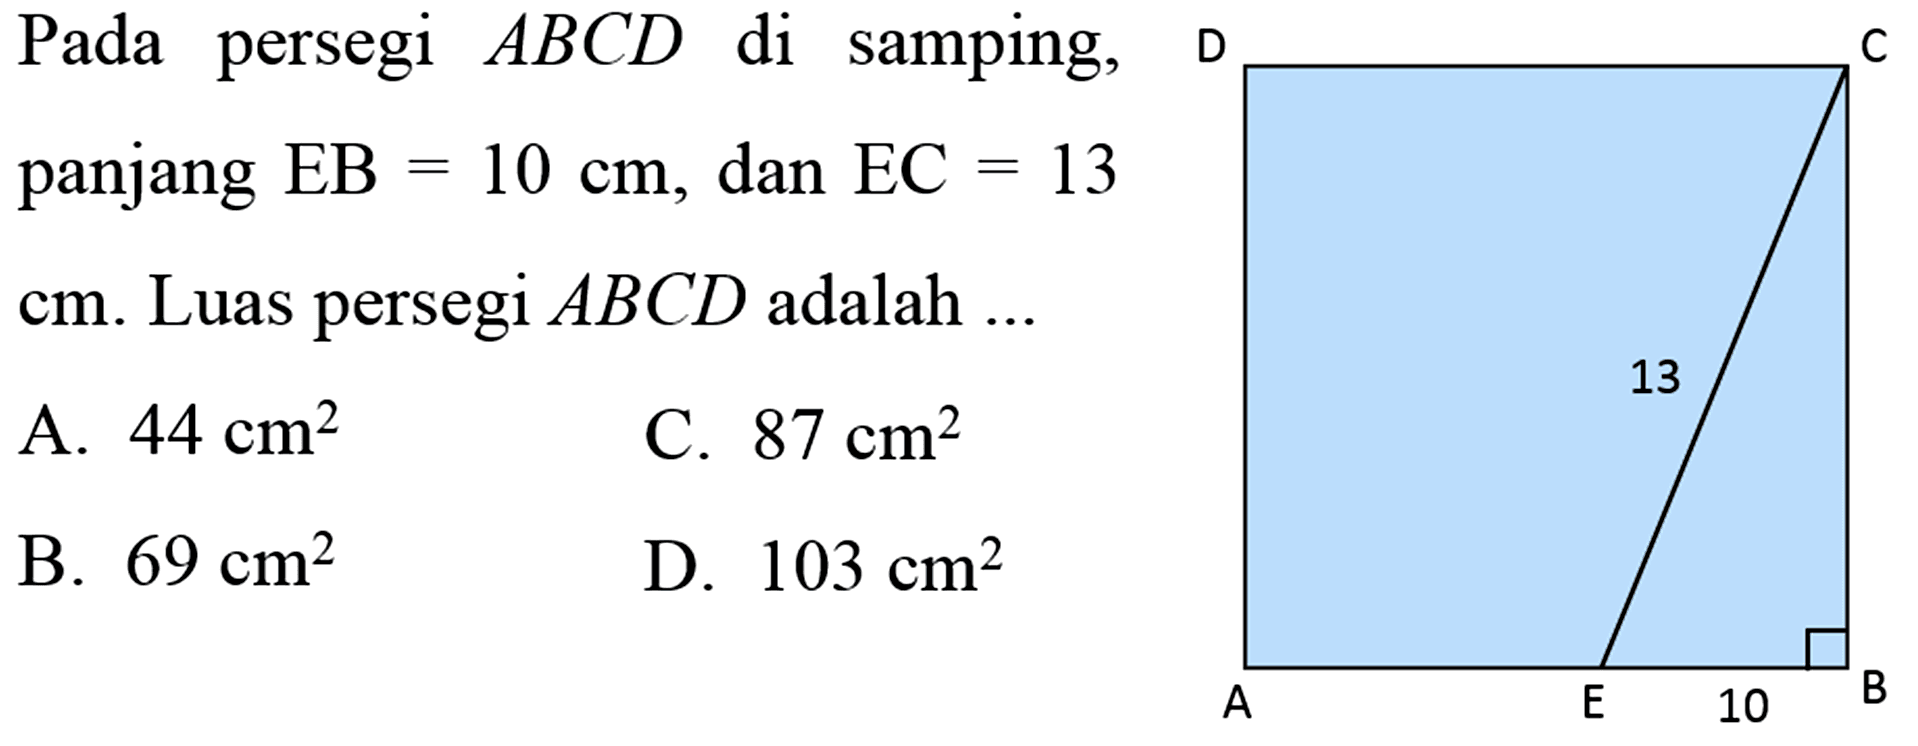 Pada persegi ABCD di samping, panjang EB=10 cm, dan EC=13 cm. Luas persegi ABCD adalah ... 